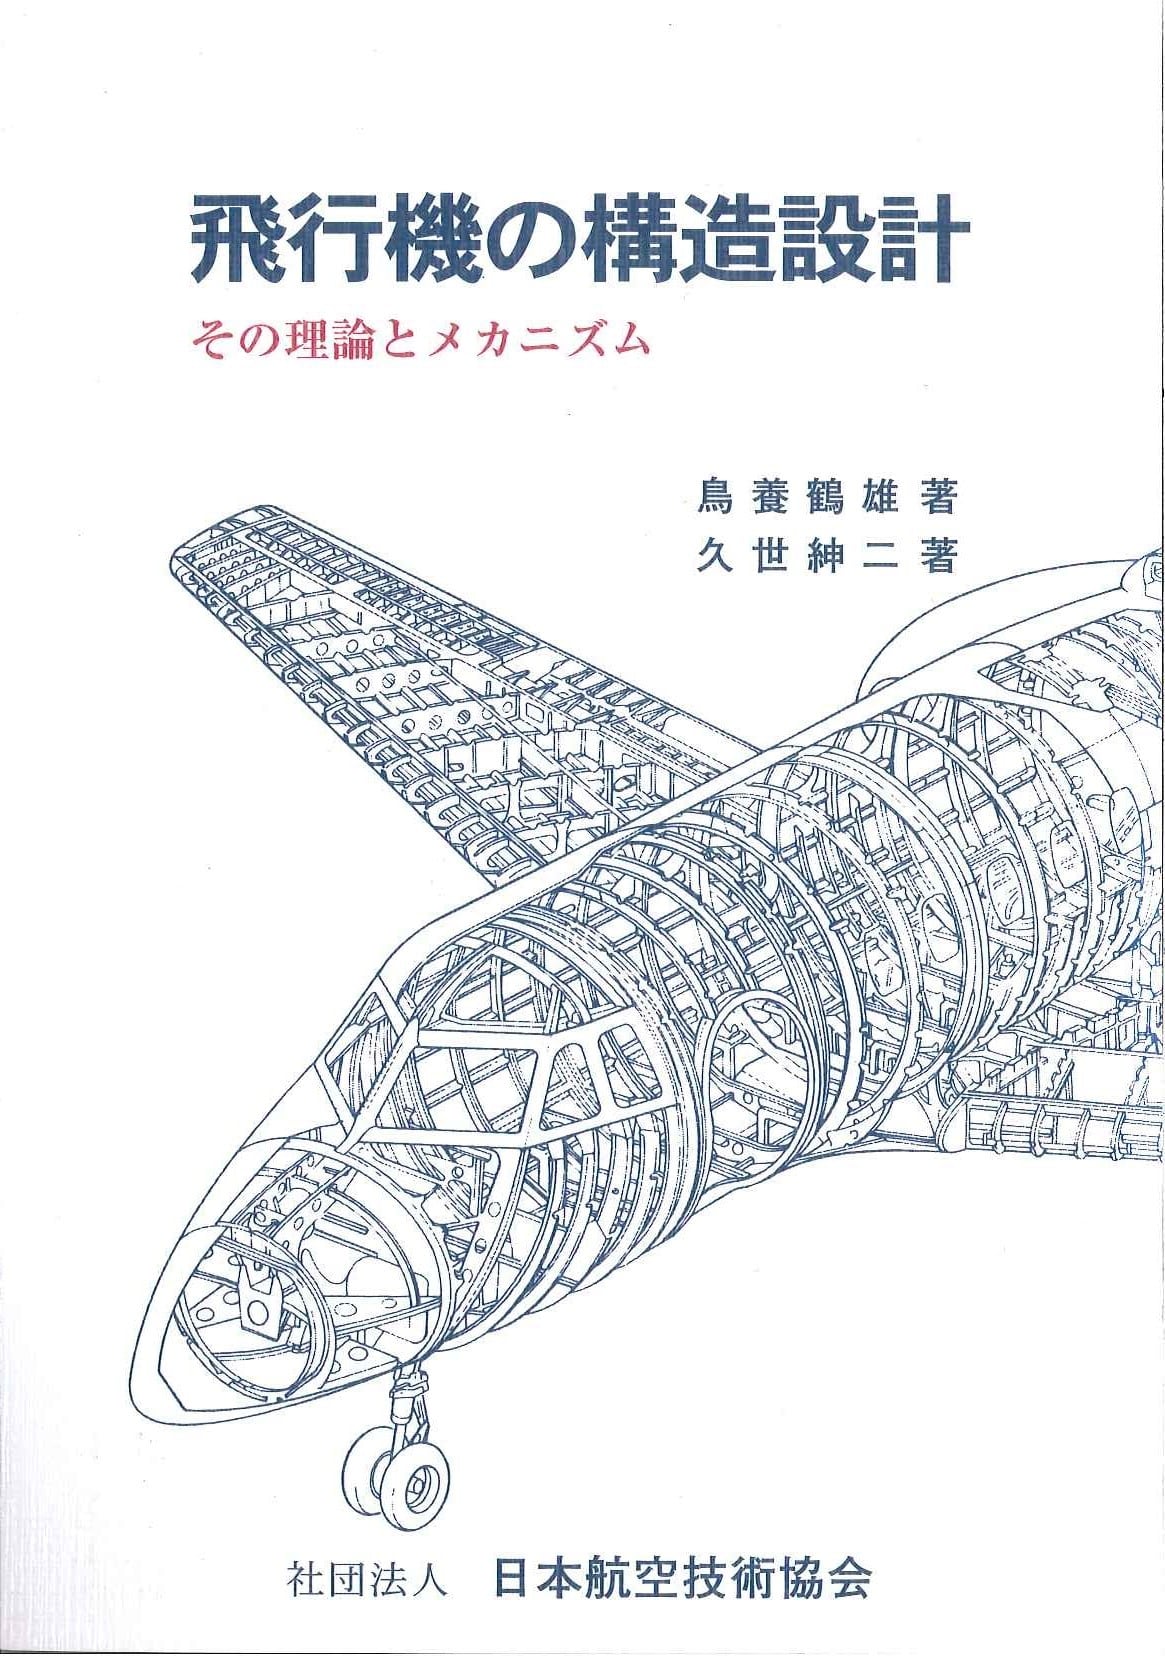 航空機構造設計 専門書「Analysis and Design」1973